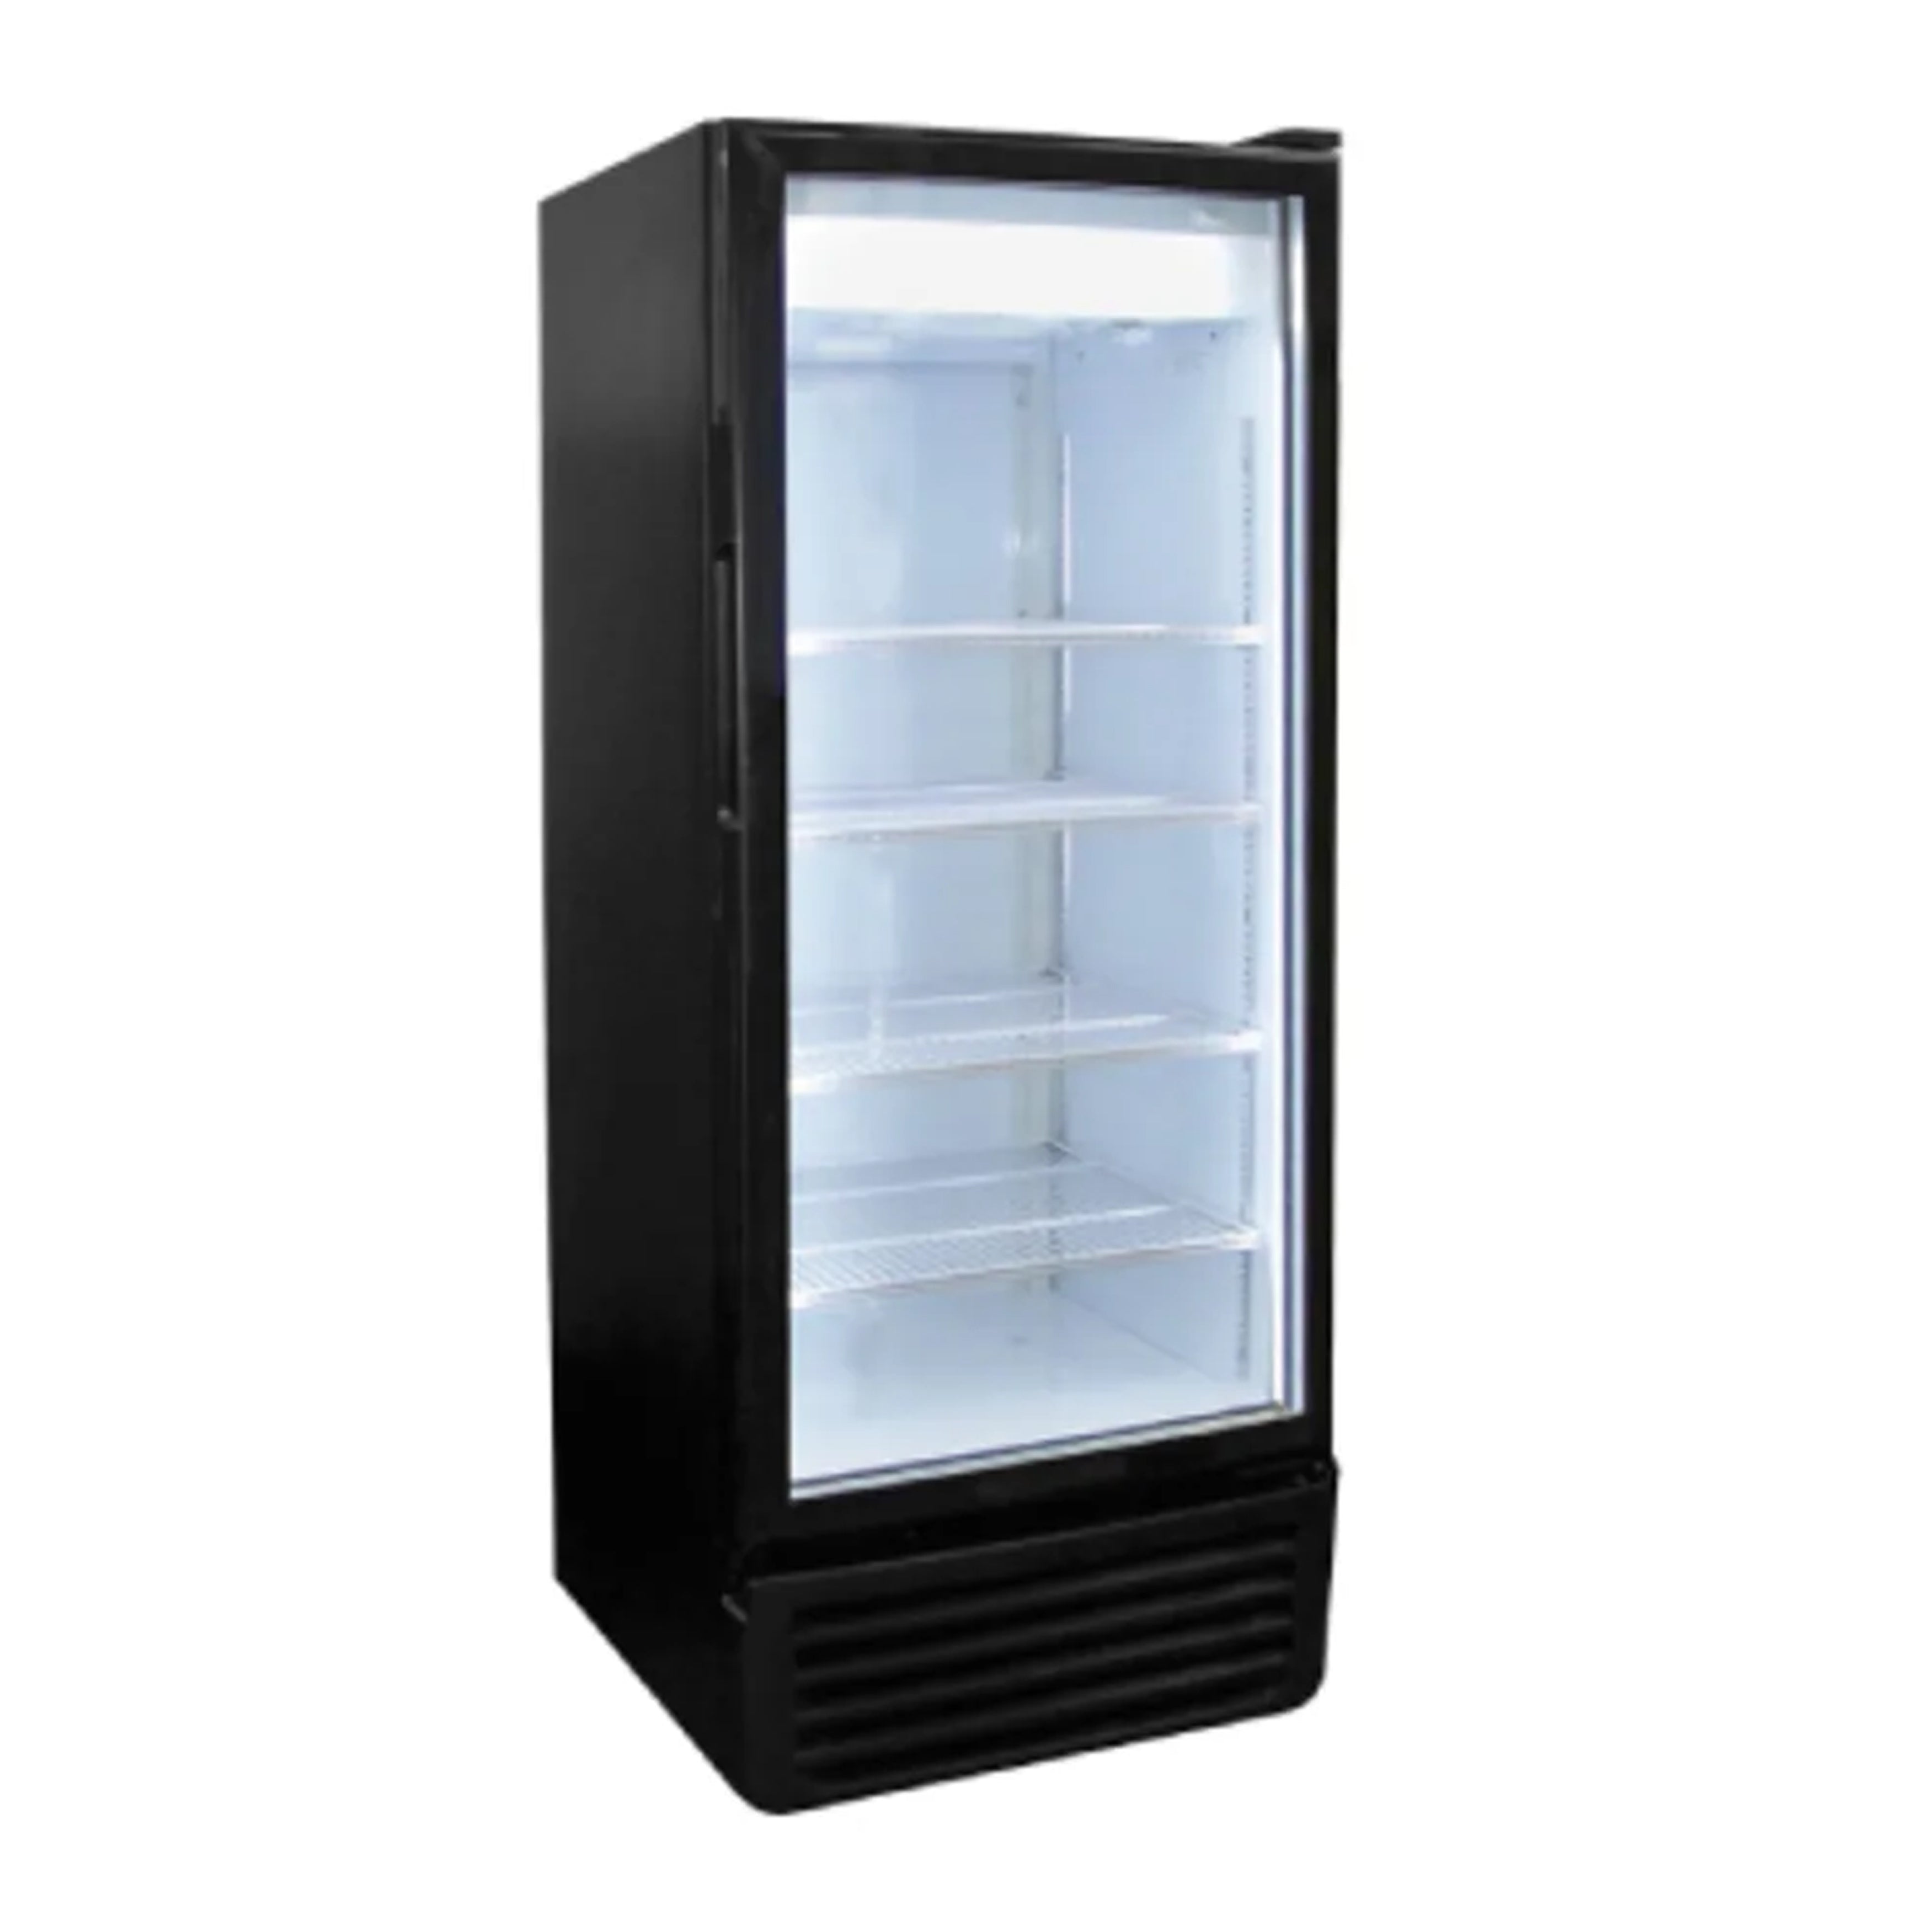 Excellence Industries - GDR-10HC, 25" Commercial 1 Glass Door Merchandiser Refrigerator 9 cu.ft.